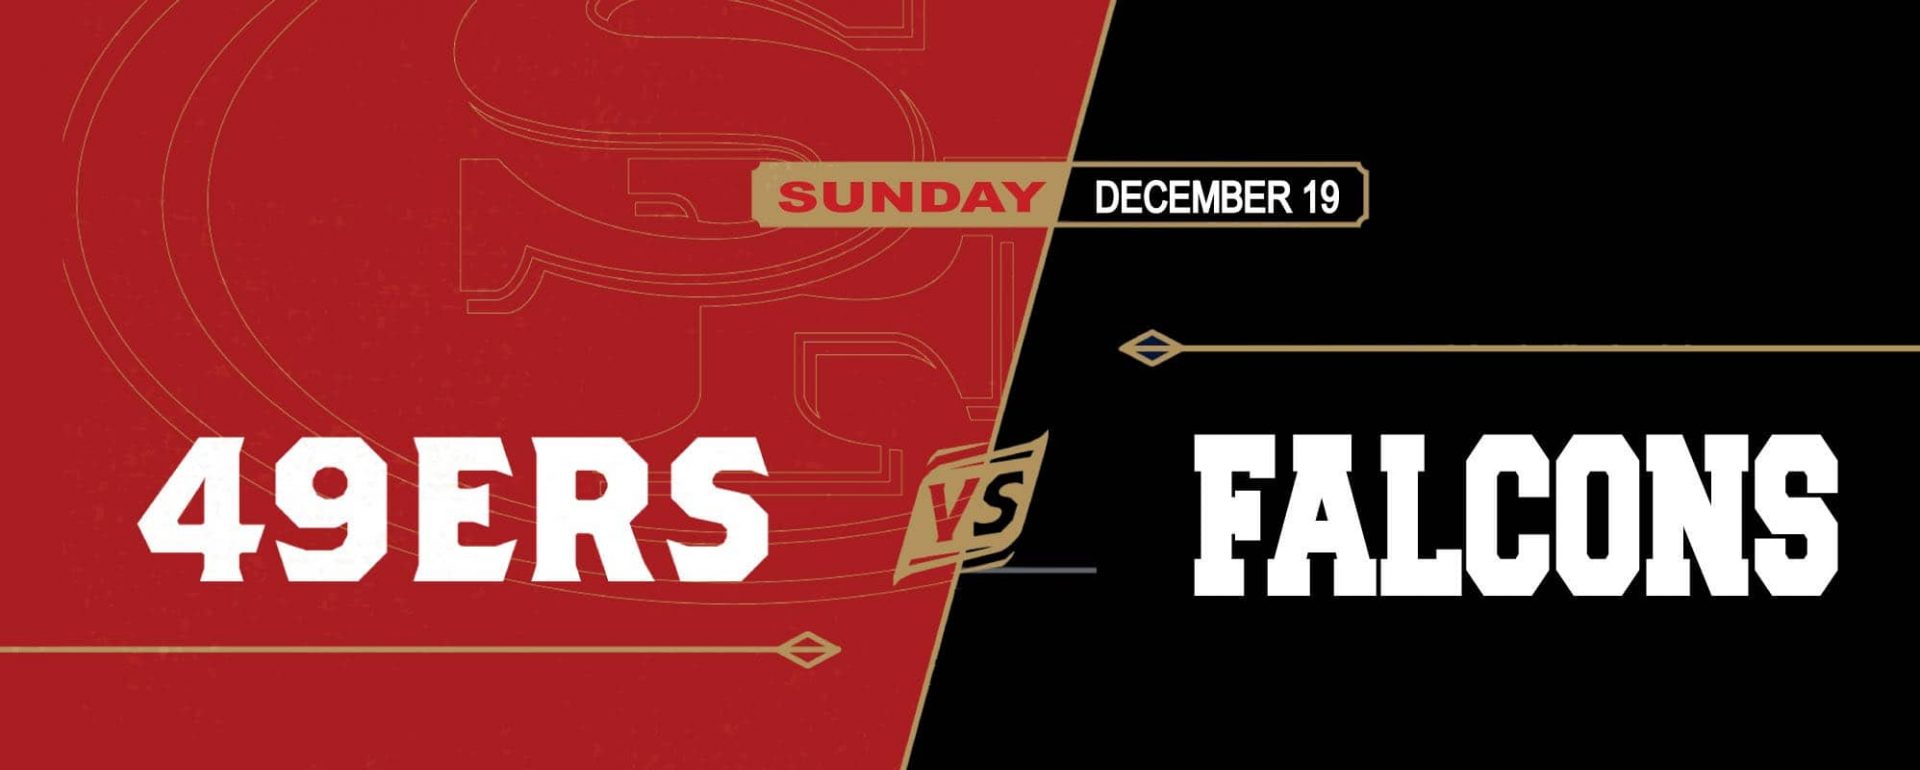 49ers vs. Falcons at Levi's Stadium